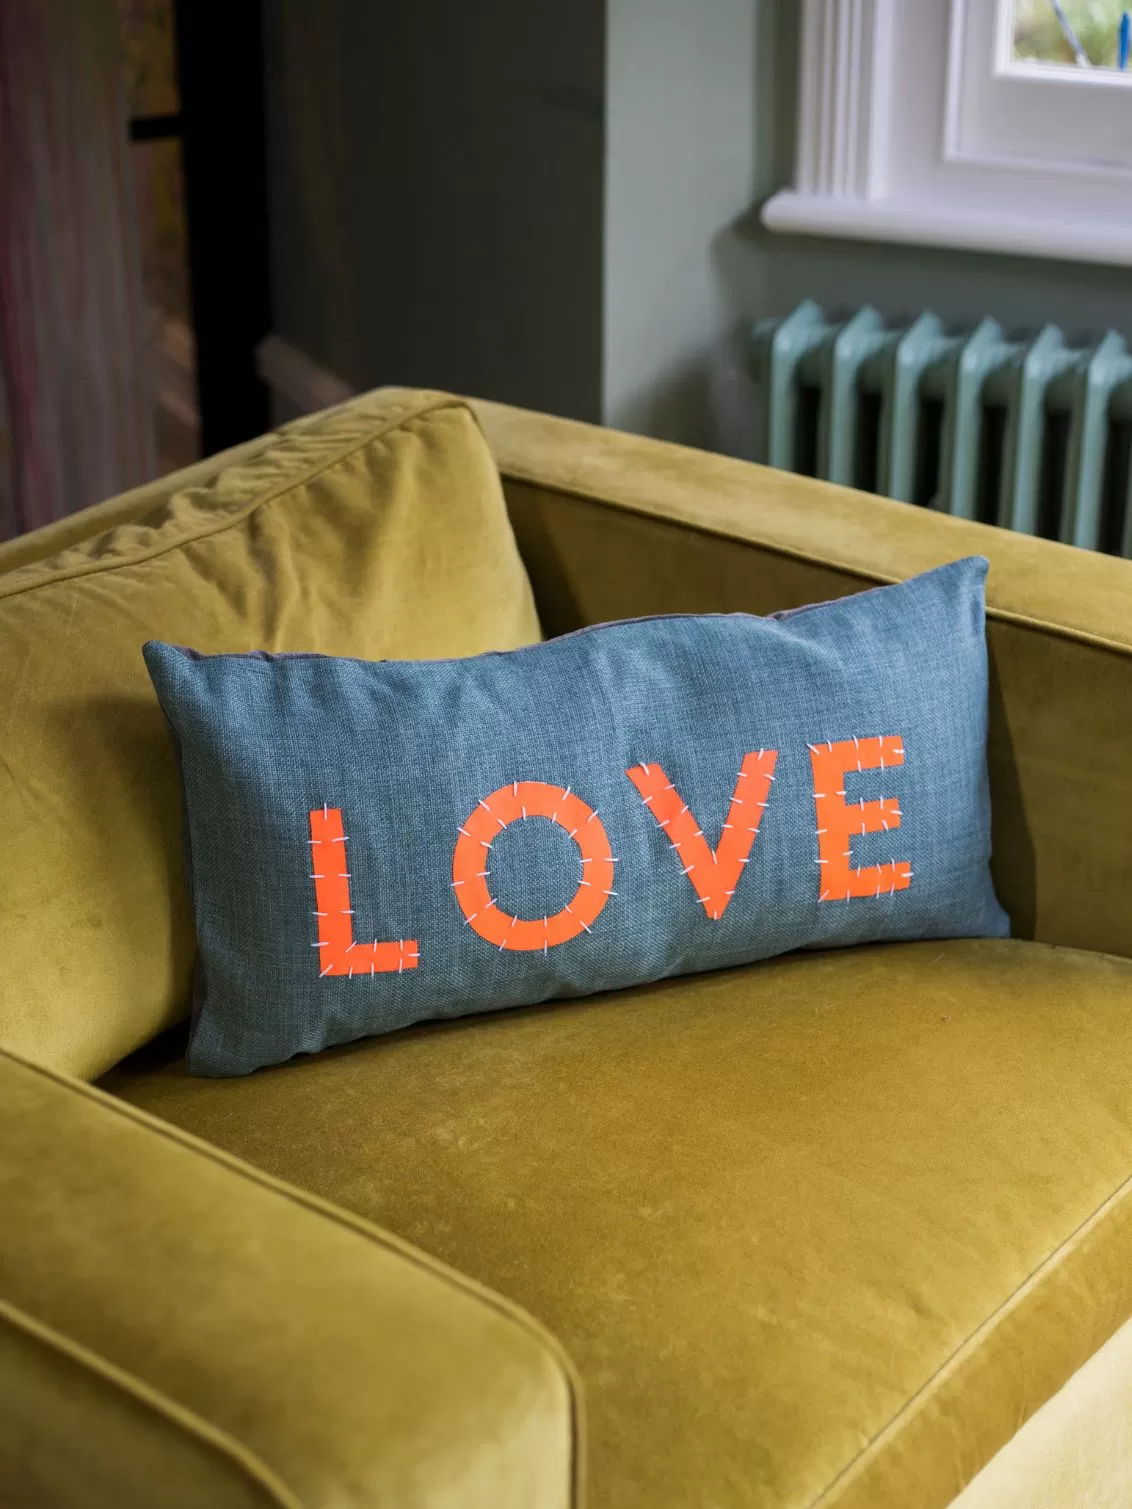 Love welcomes Love cushion seen on a yellow sofa.